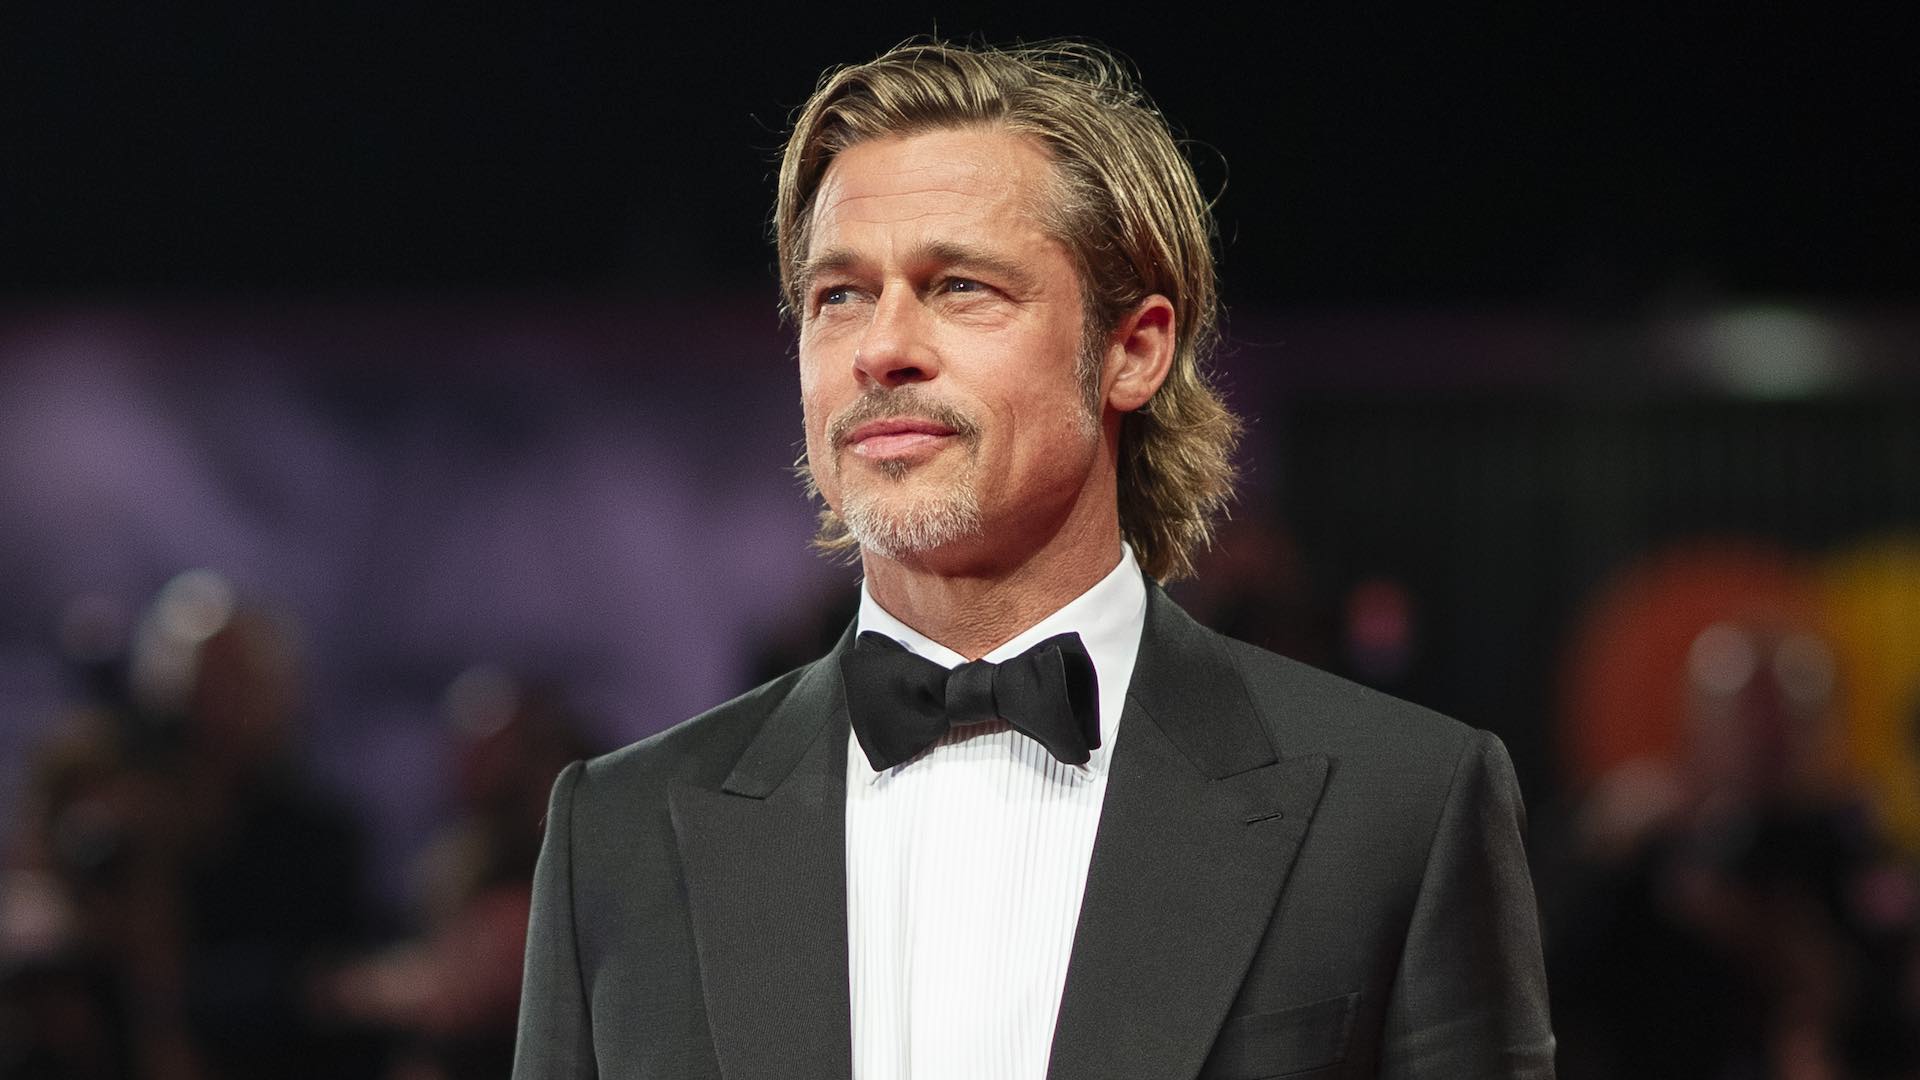 Brad Pitt: "La idea de la masculinidad fuerte es una cárcel"